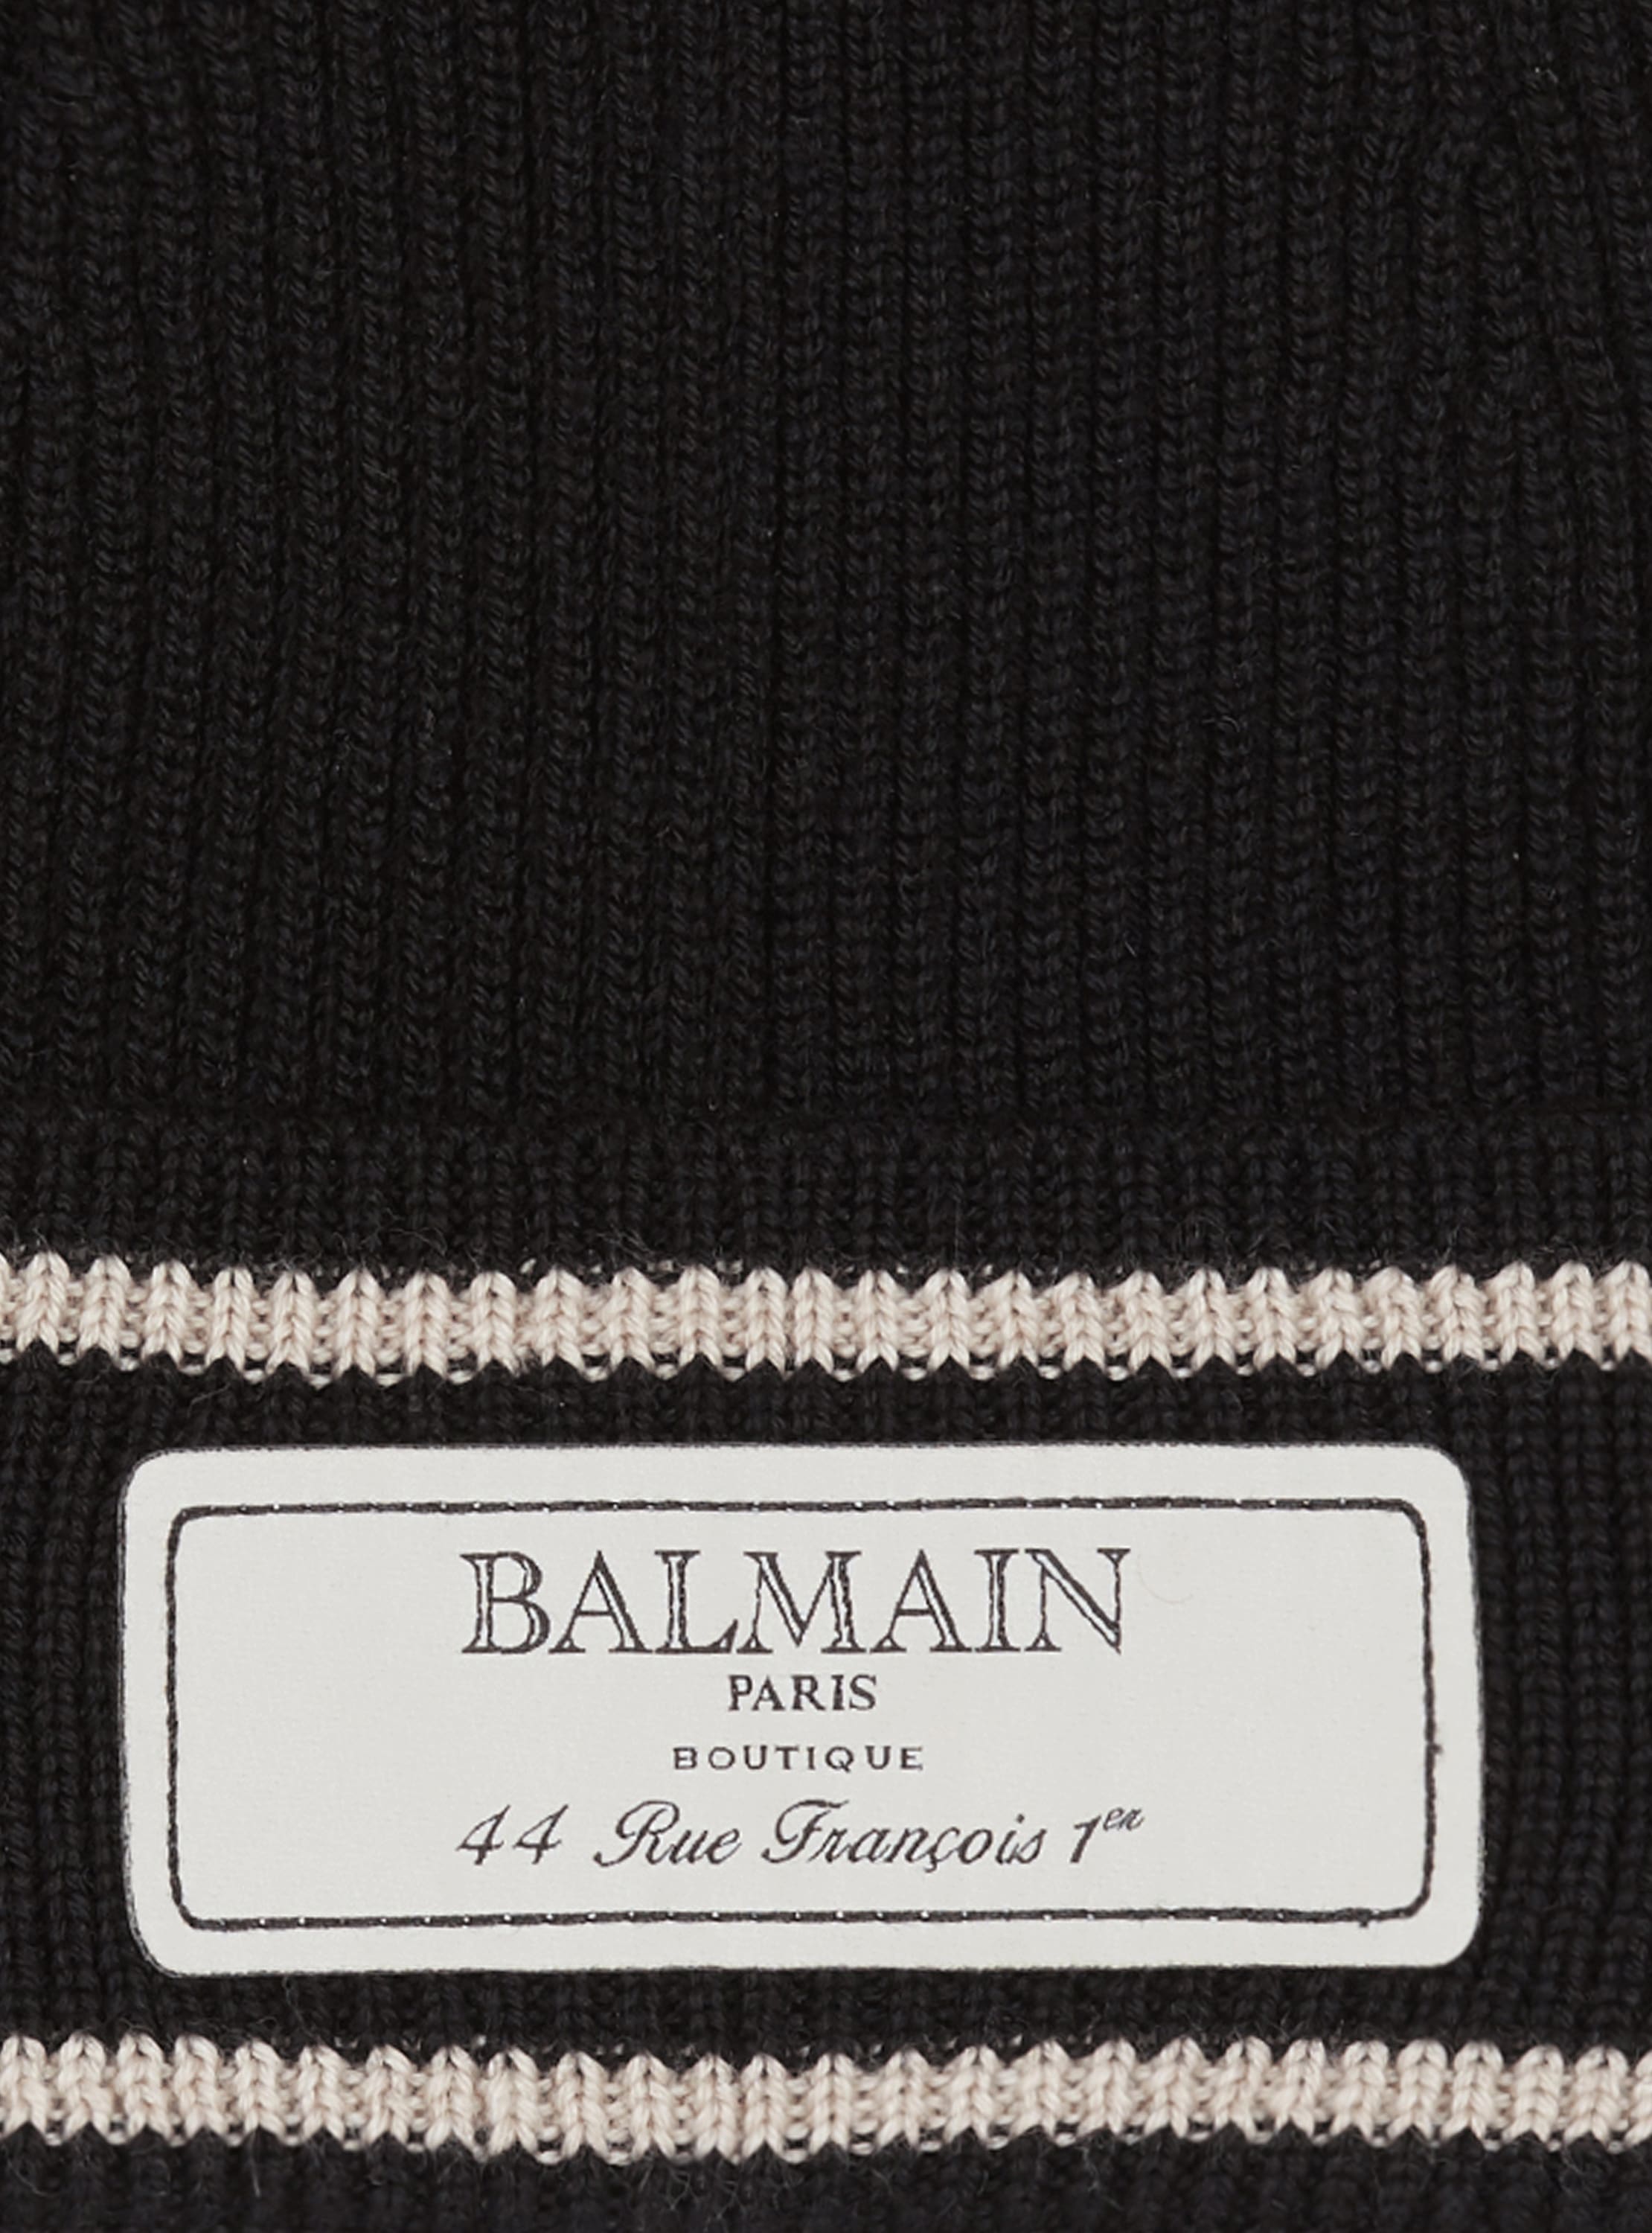 Balmain label beanie